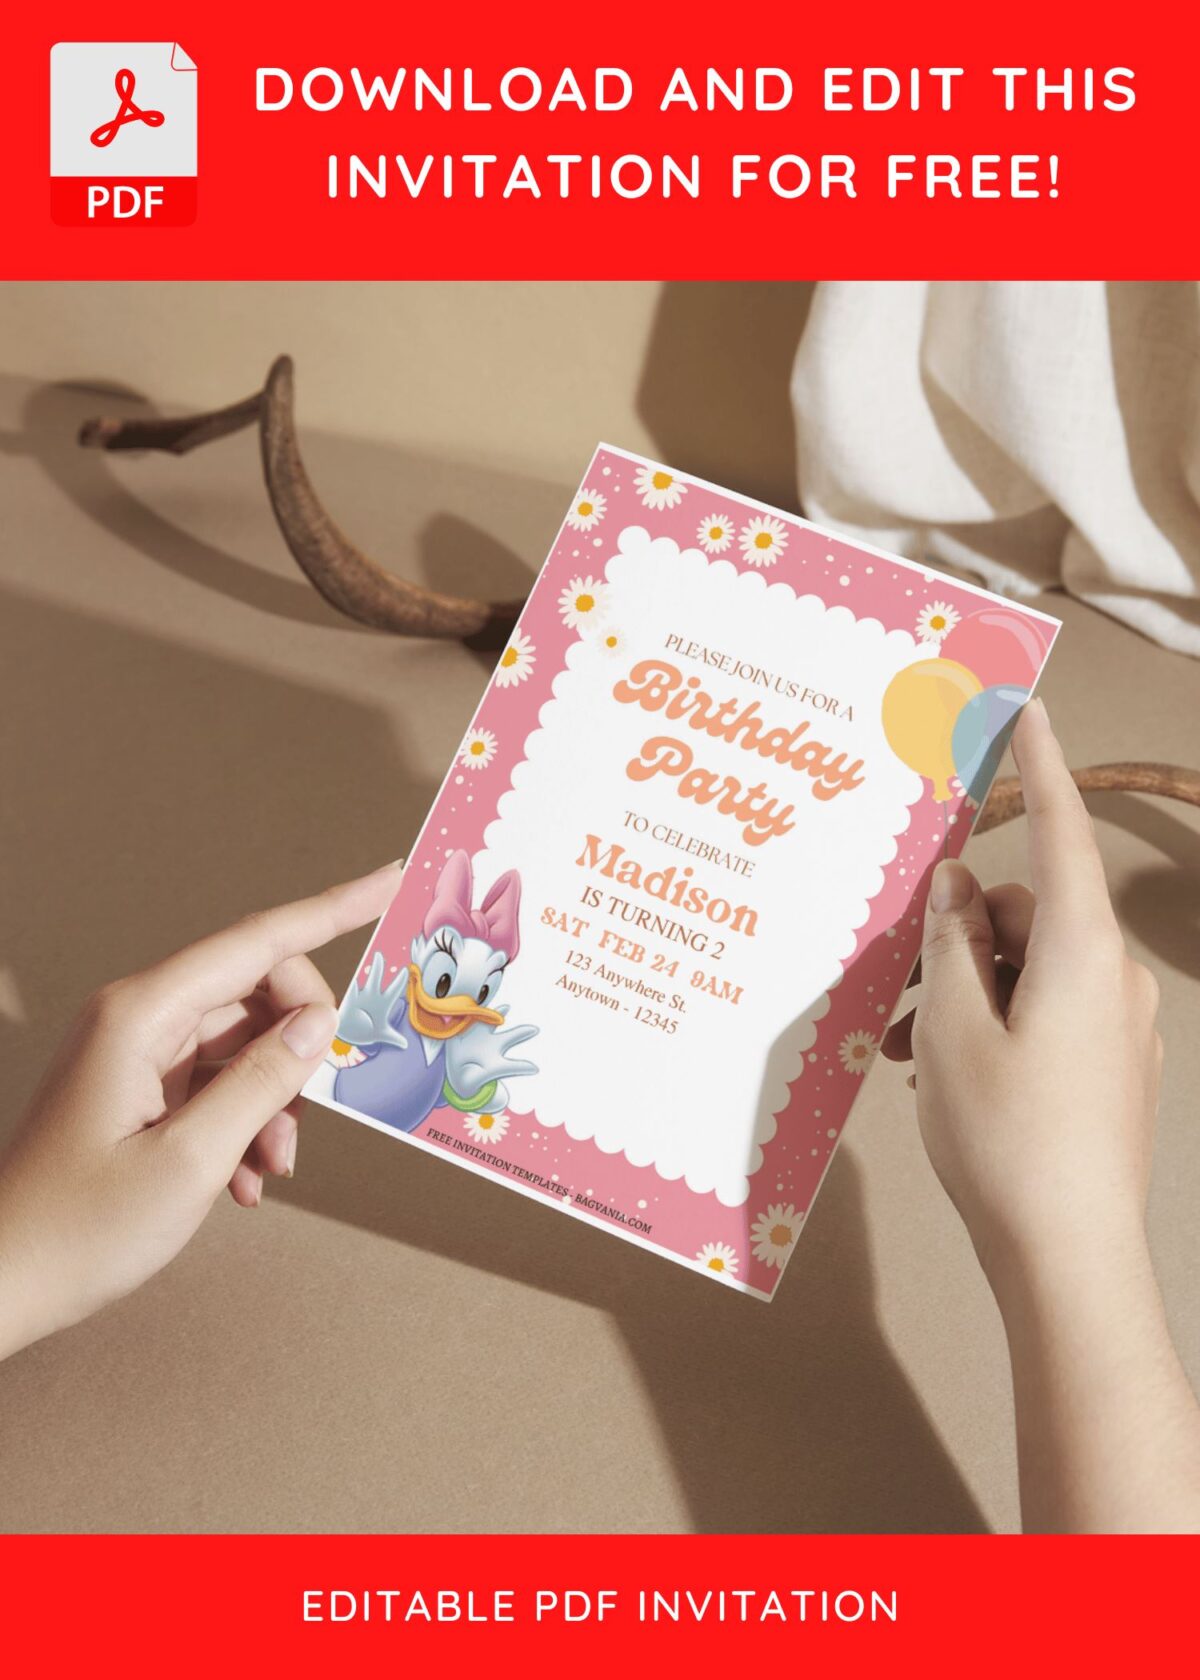 (Free Editable PDF) Playful Daisy Duck Birthday Invitation Templates F